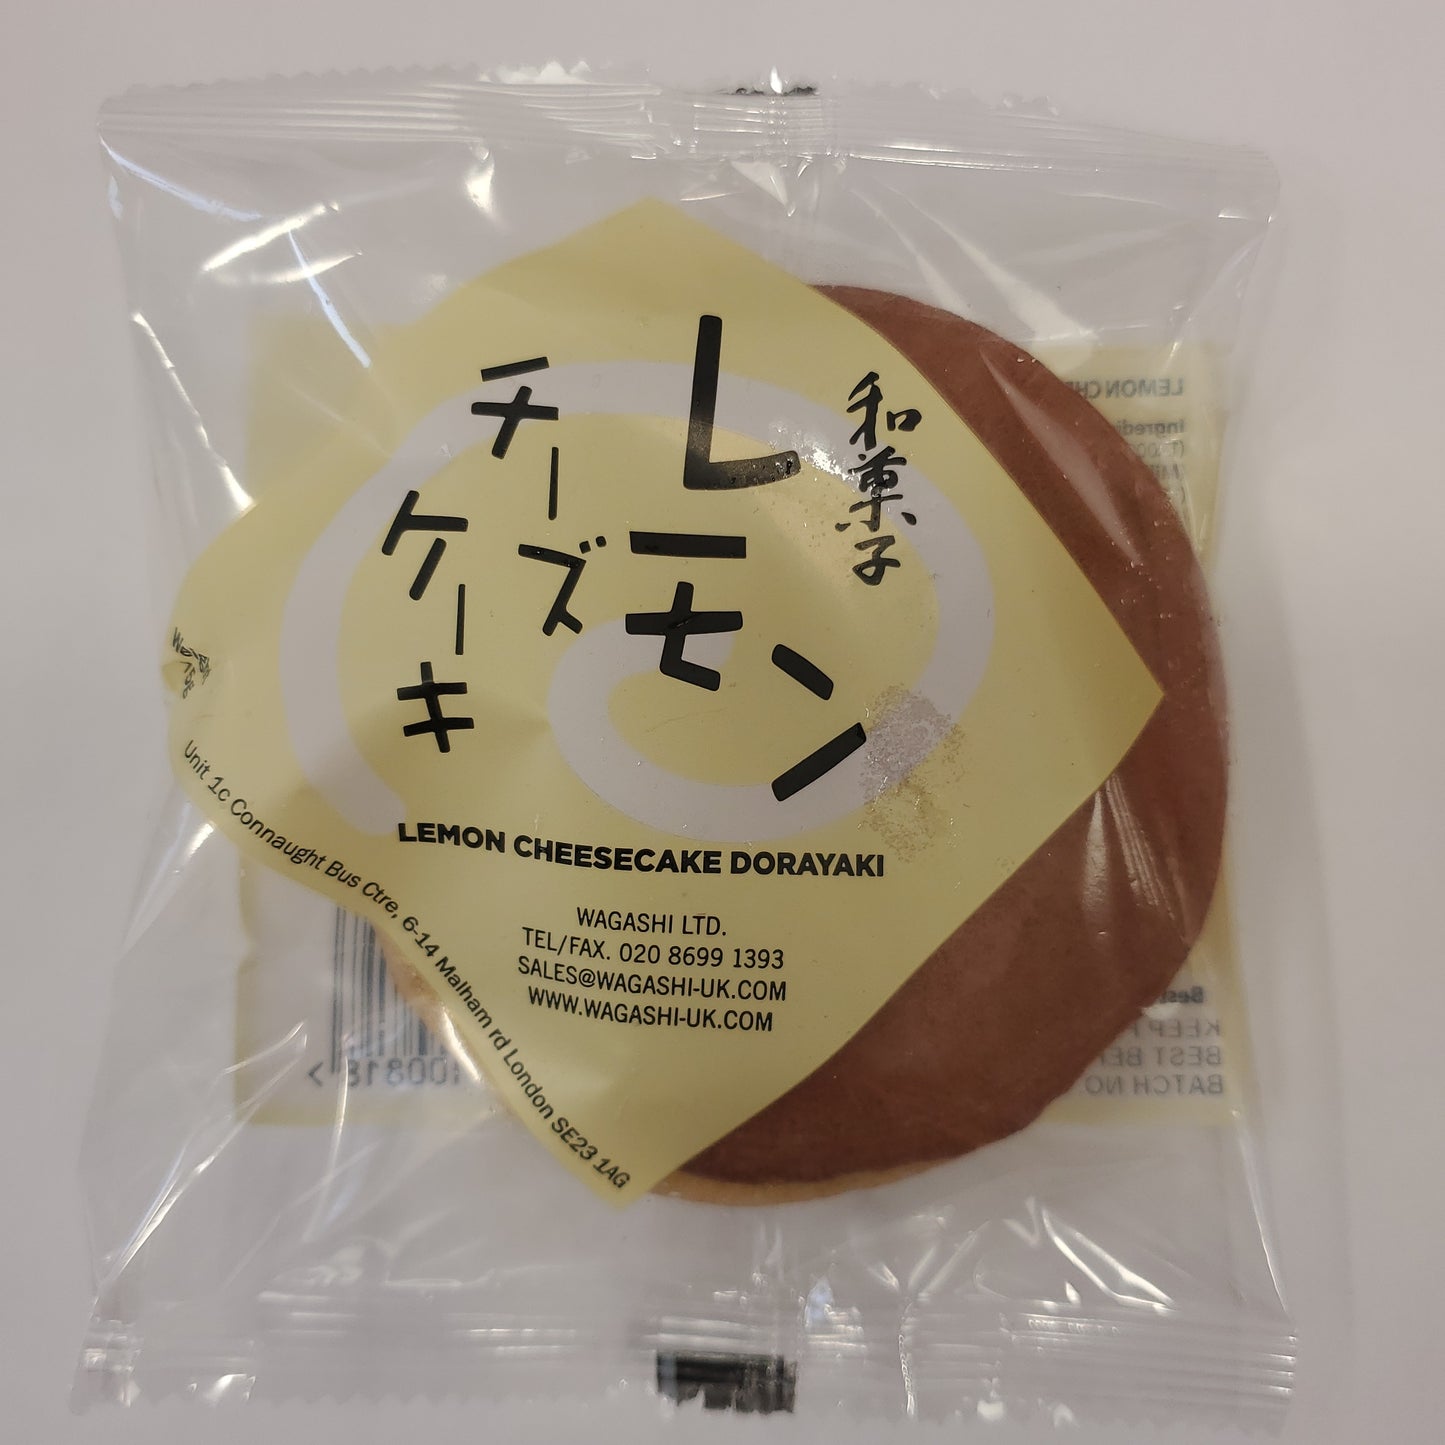 Wagashi Lemon Cheese Cake Dorayaki 75g